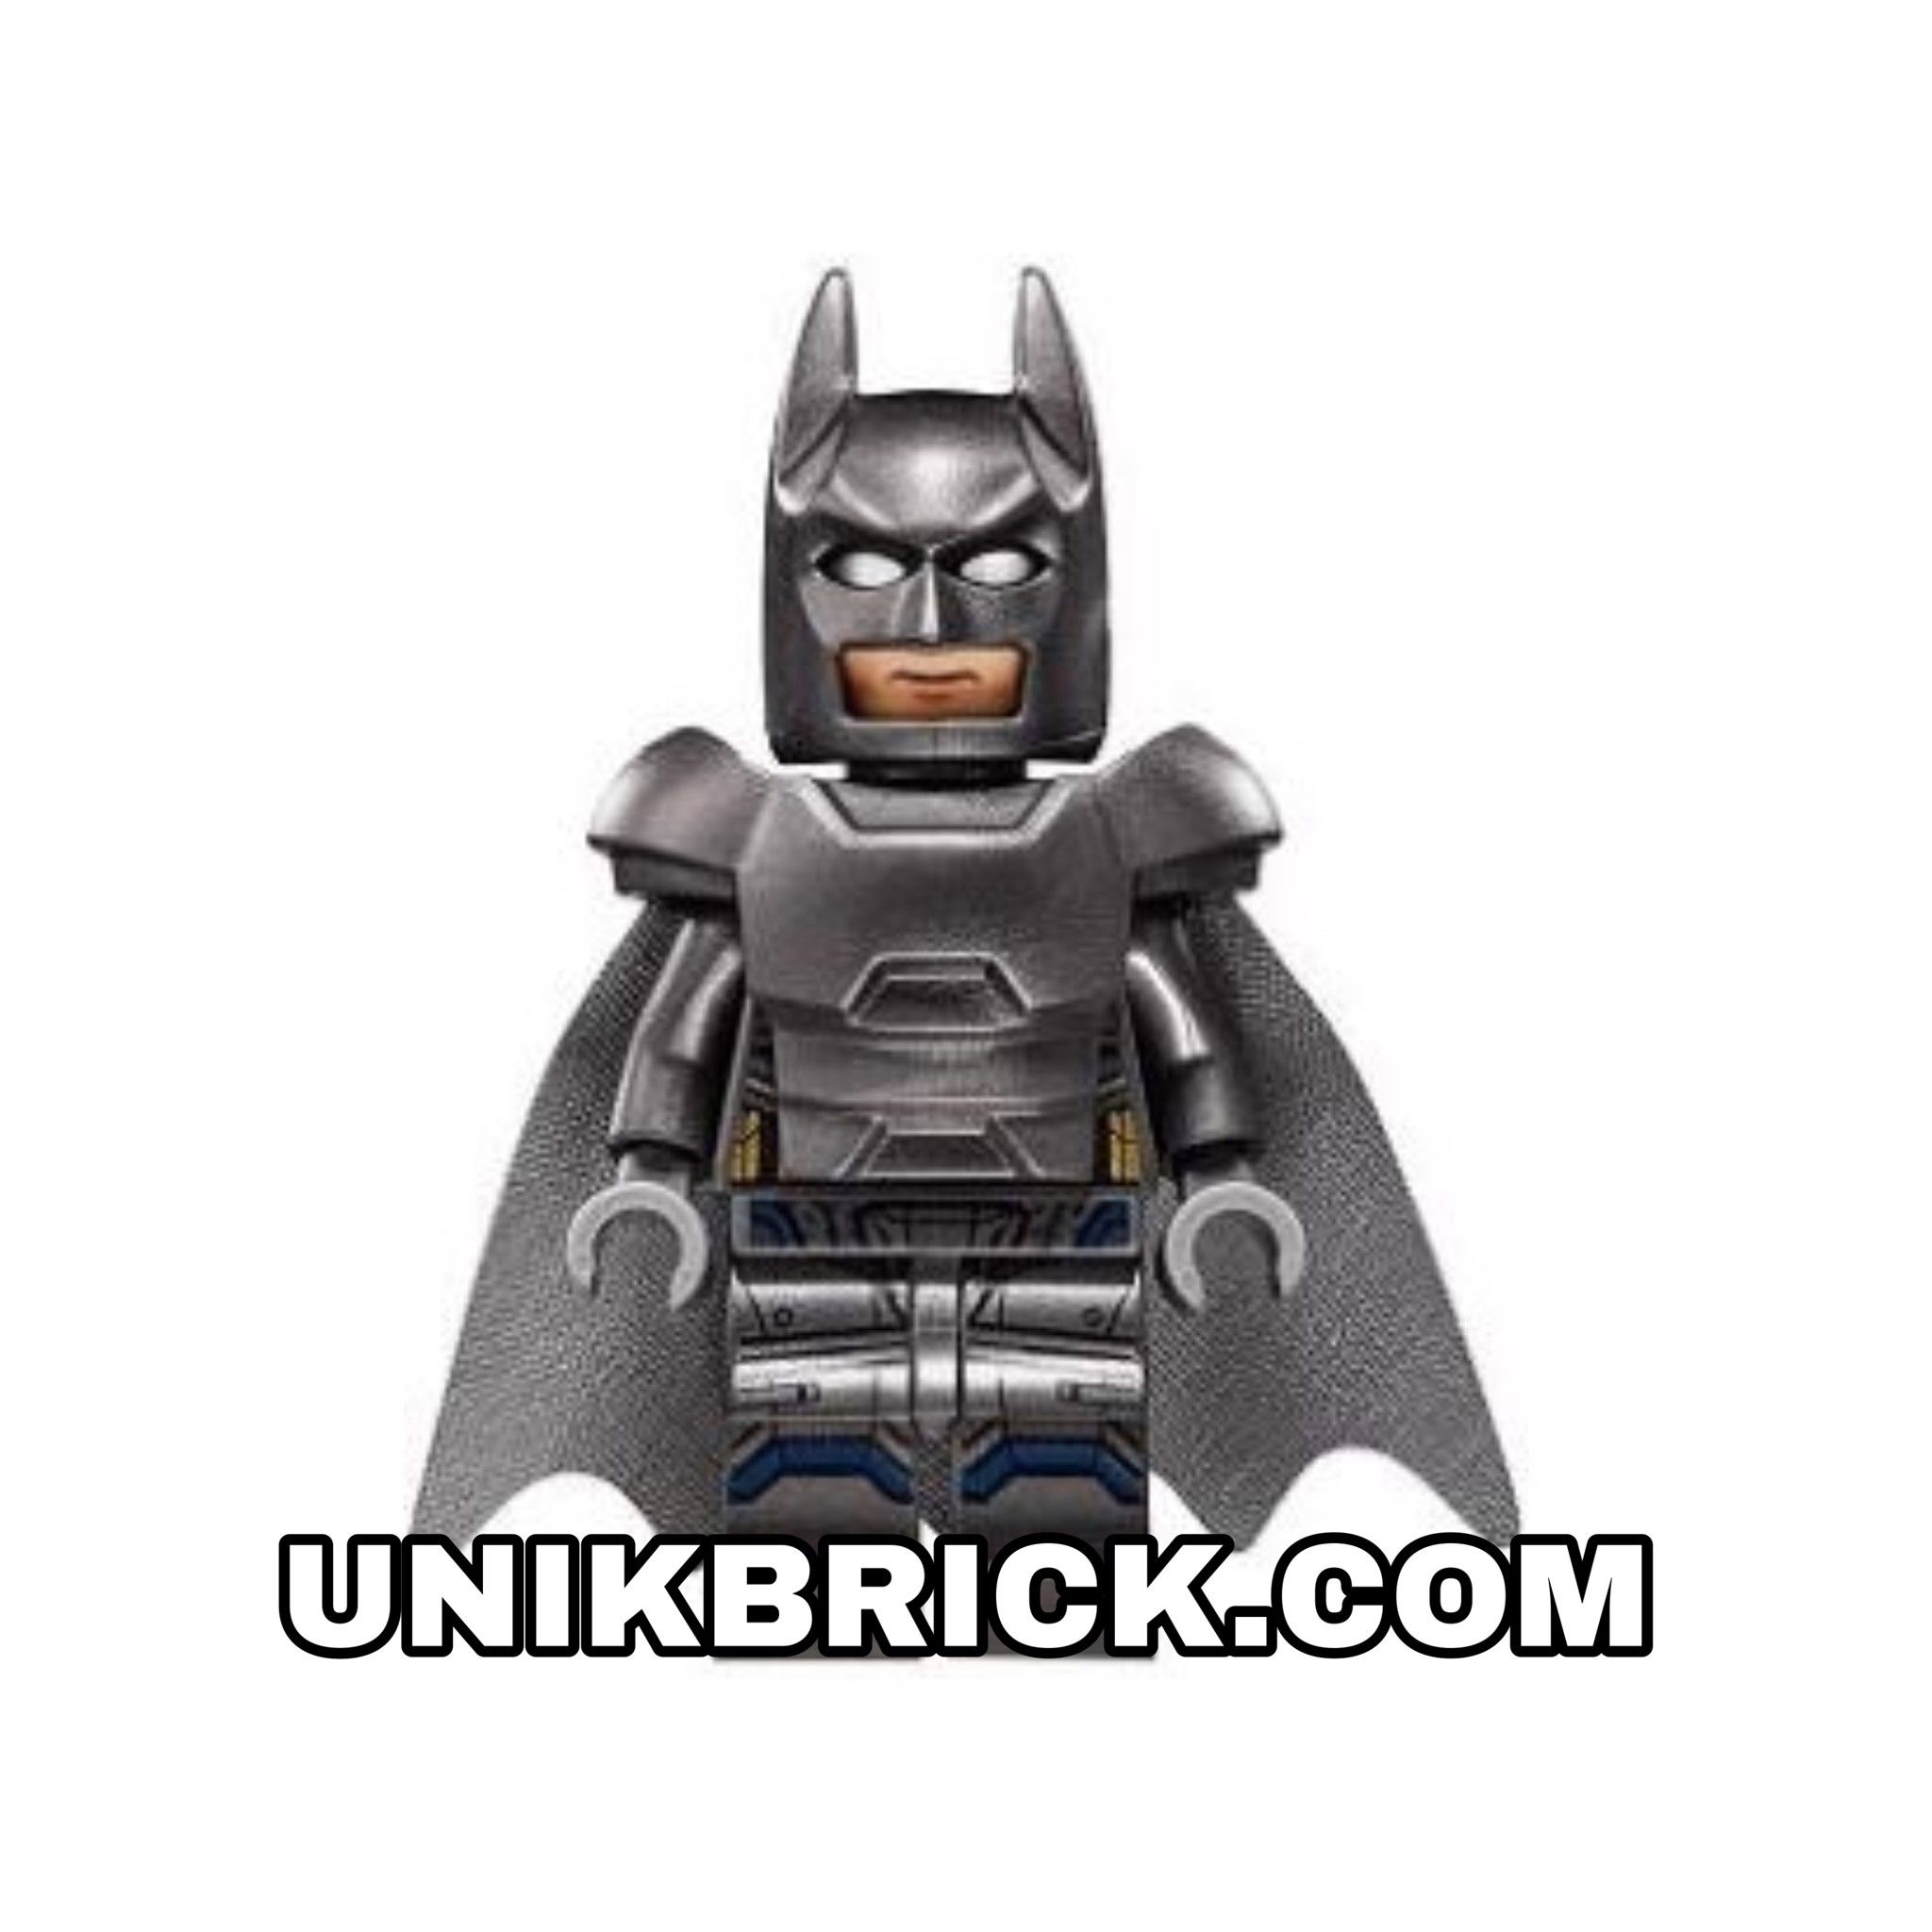 ORDER ITEMS] LEGO Batman Armored – UNIK BRICK